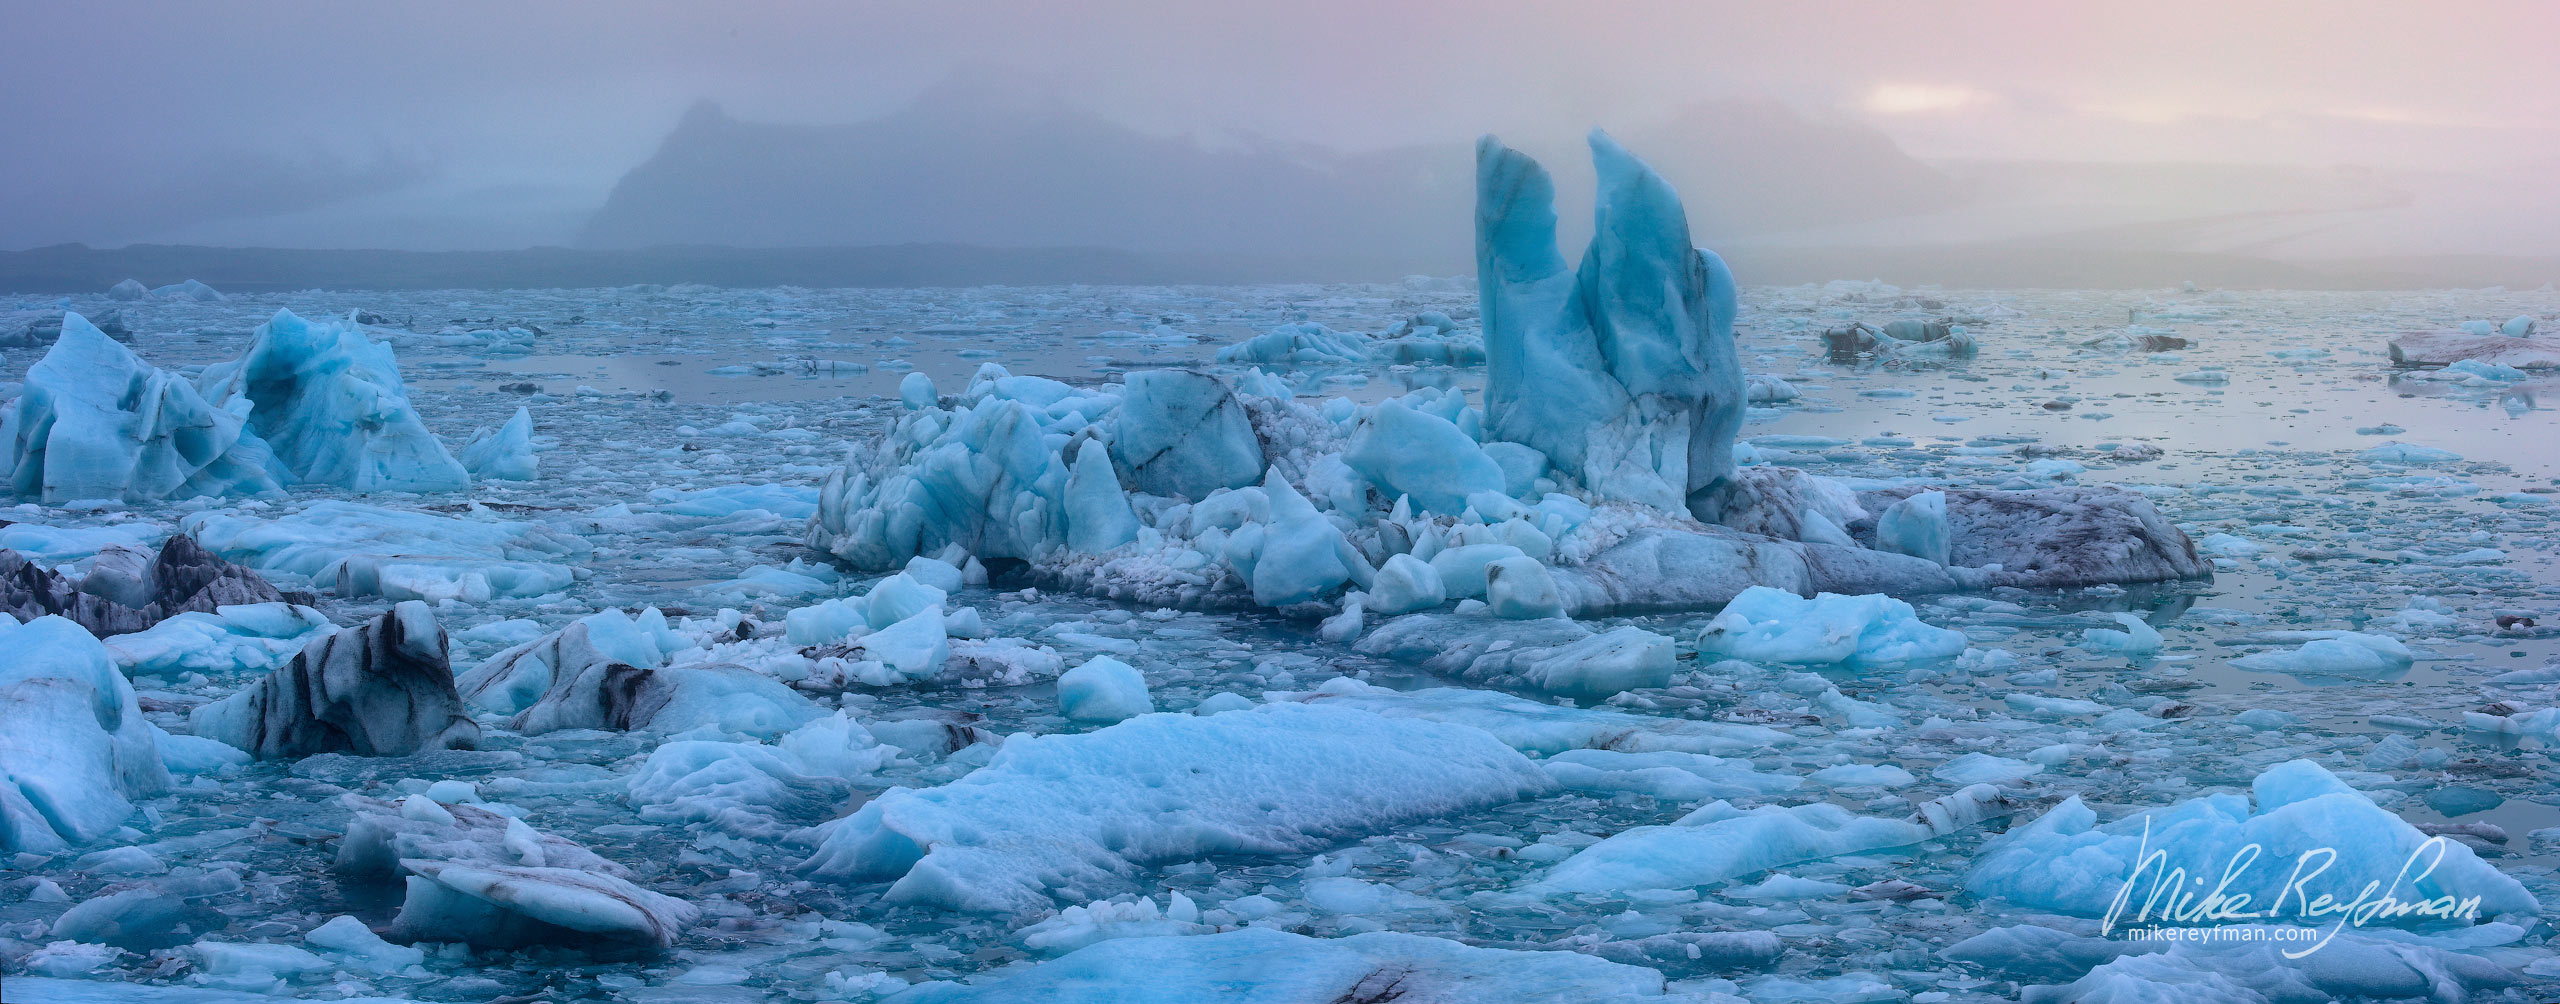 Icebergs in the Jokulsarlon (Jökulsárlón) glacial lagoon. Breiðamerkurjökull glacier, Vatnajökull National Park, Iceland, South coast IC-ICE 048 _10P3484 - Where Lava Meets the Ocean. Iceland coastline. - Mike Reyfman Photography